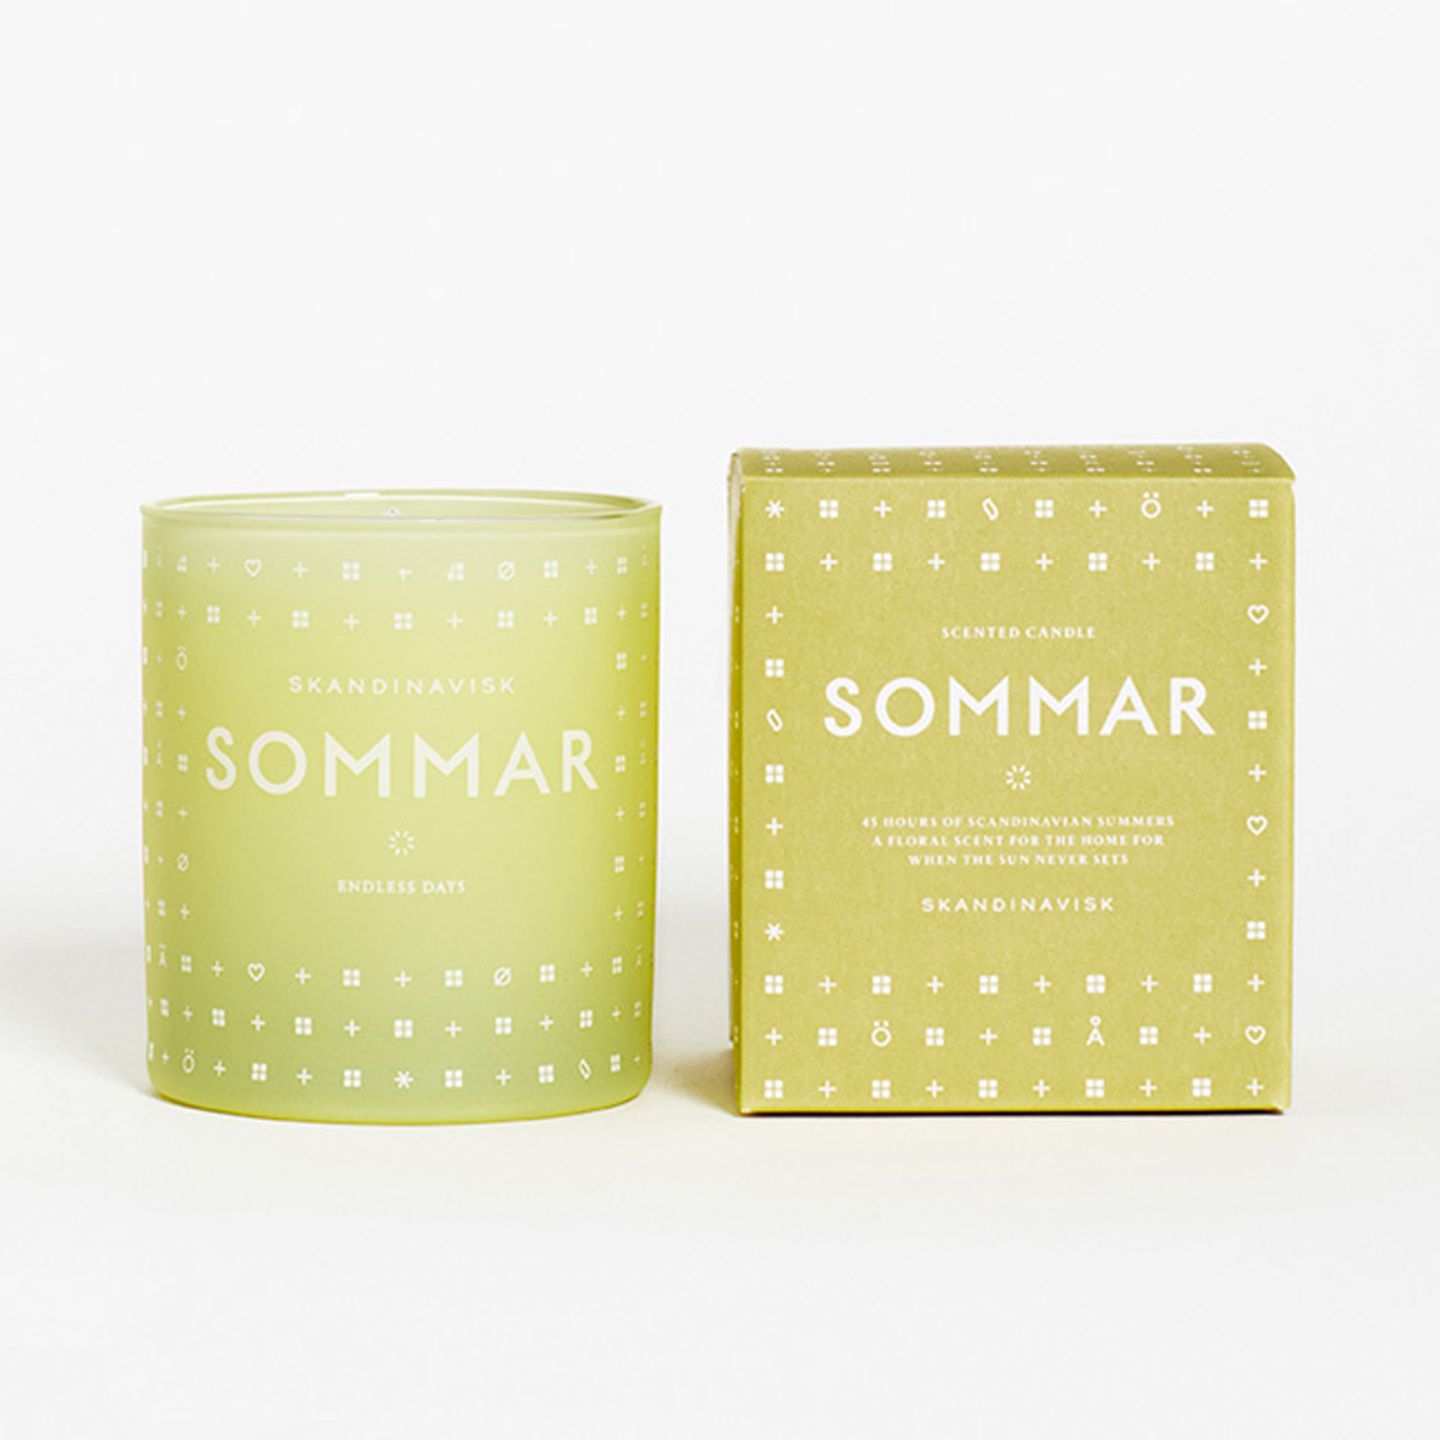 Duftkerze "Sommar" von Skandinavisk